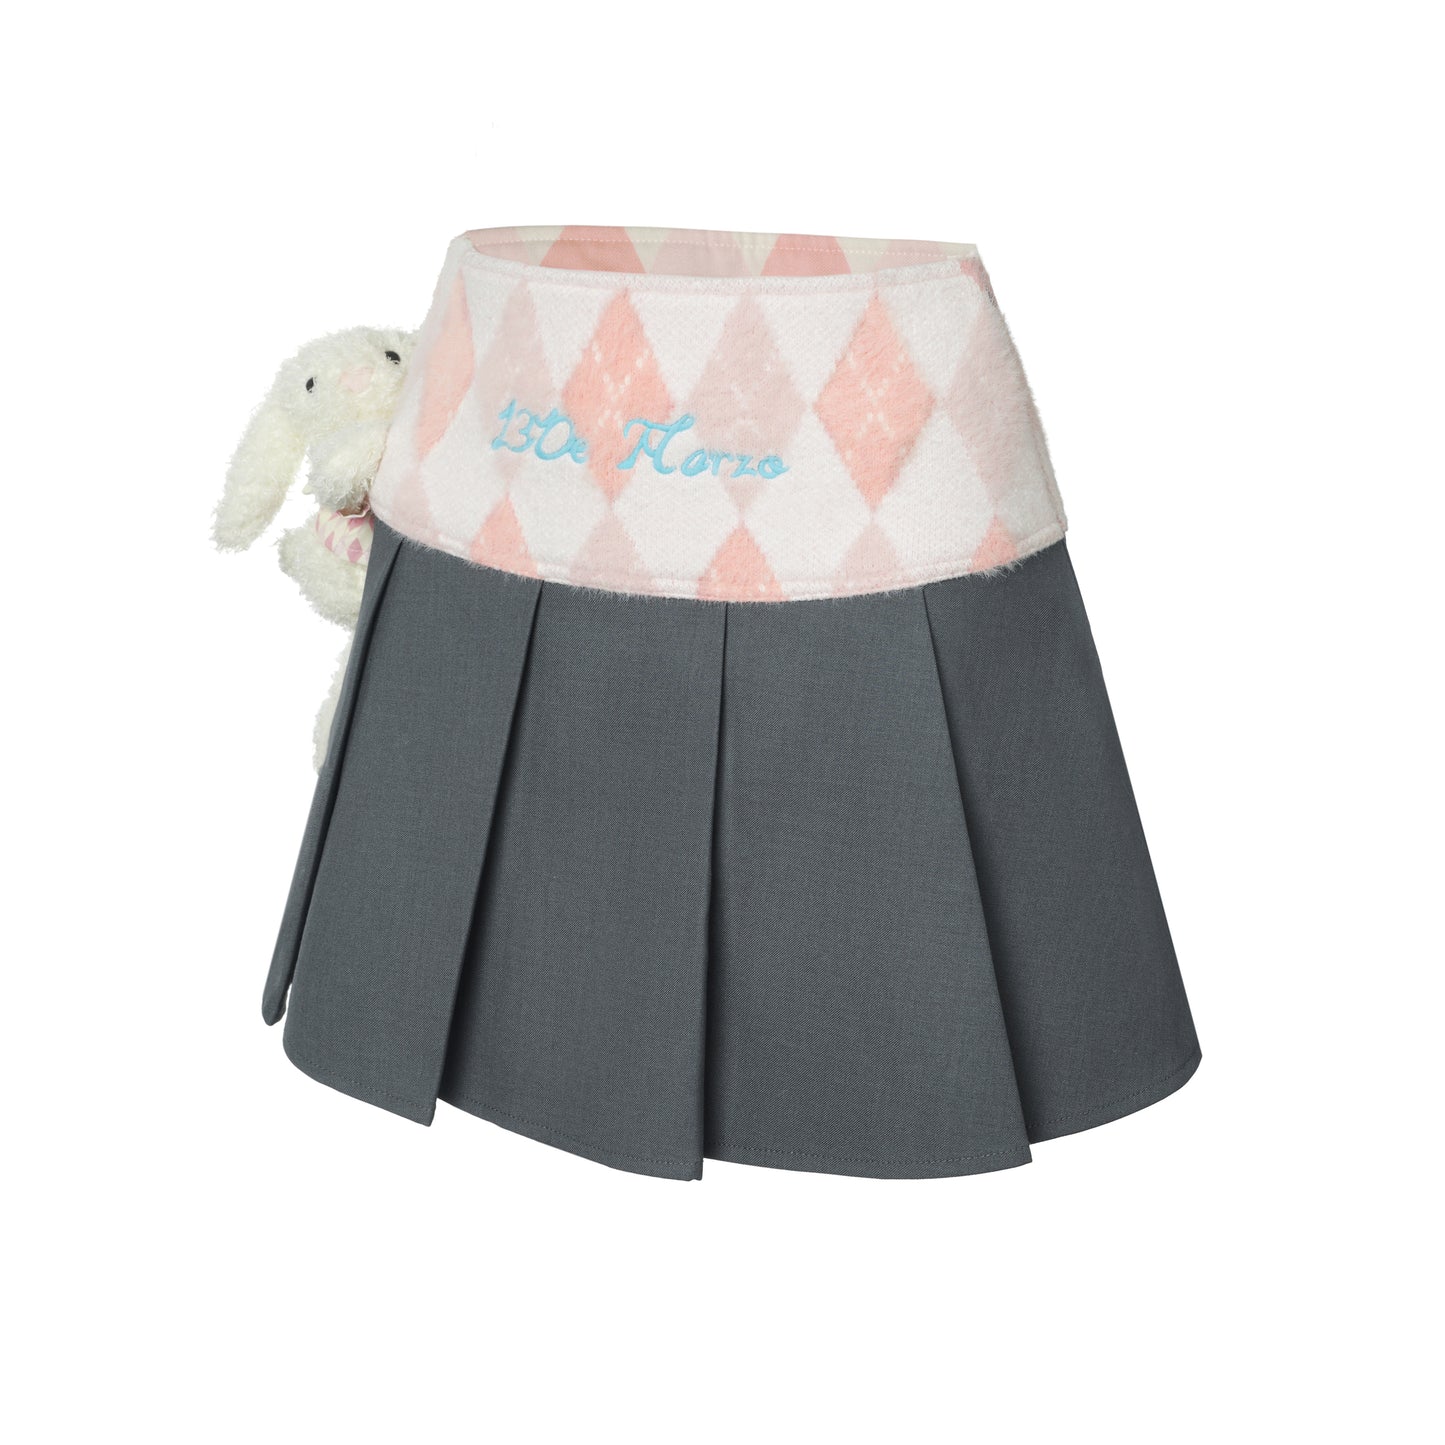 13DE MARZO Diamond Check Pleated Skirt